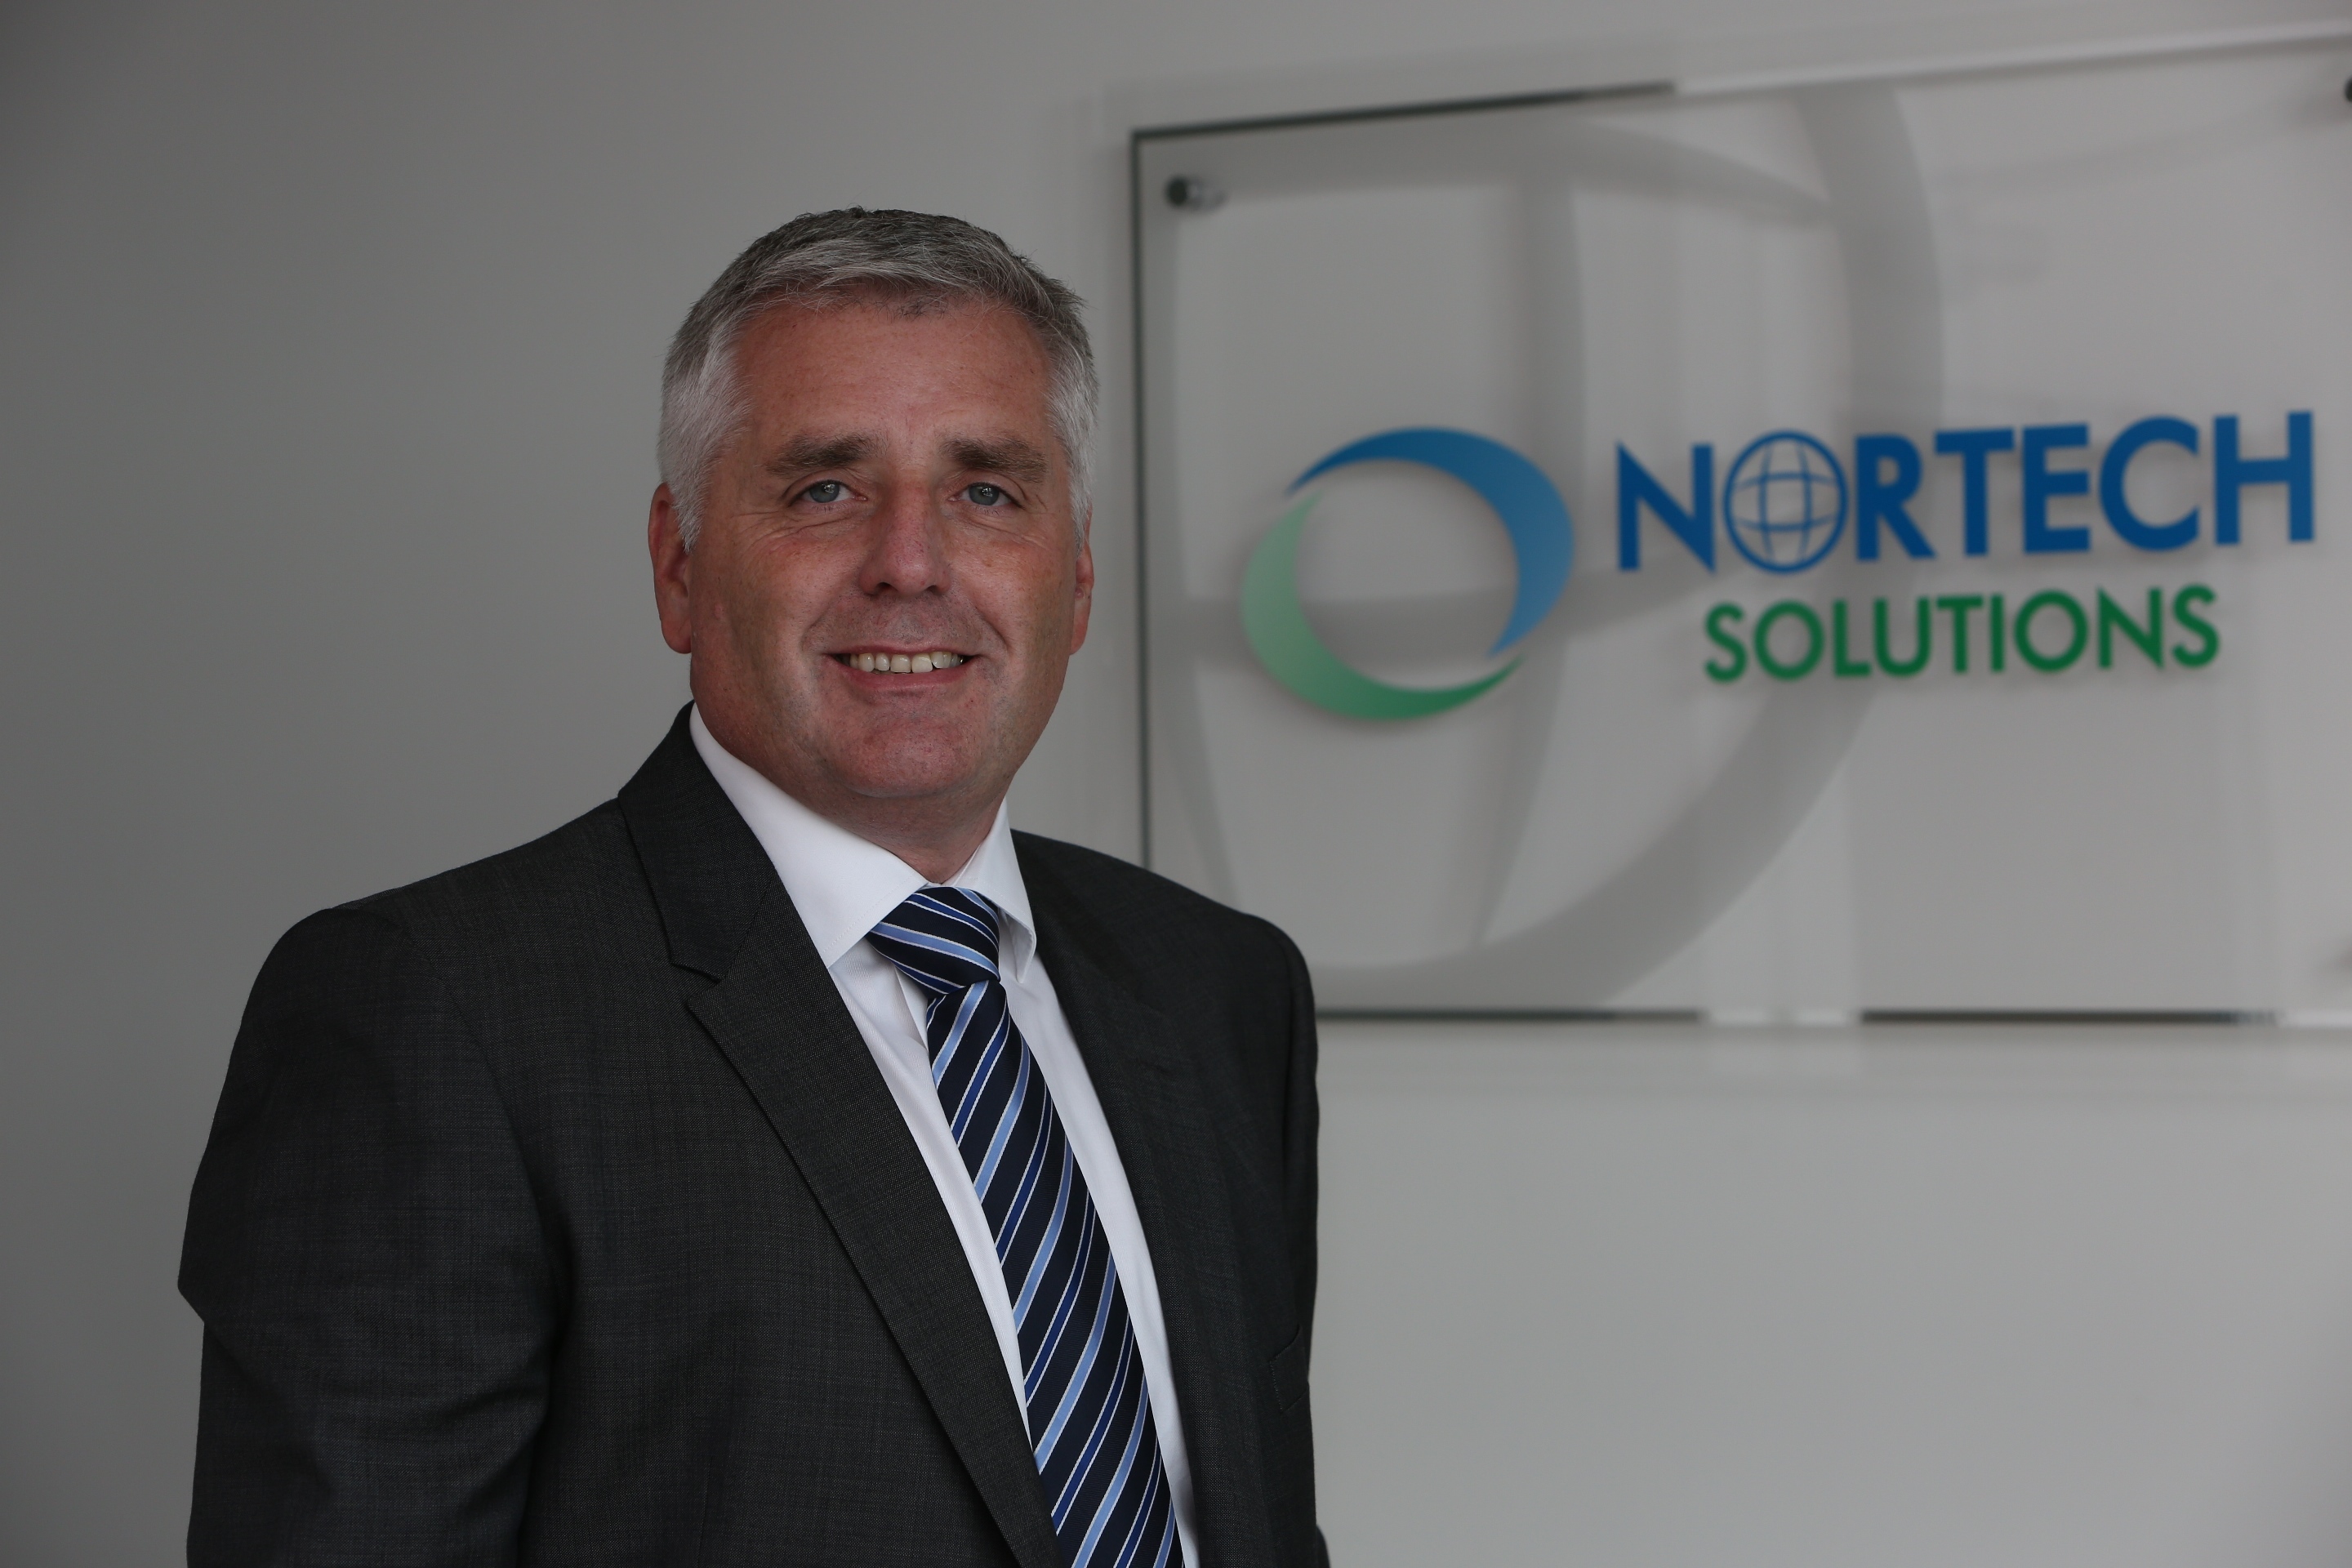 Nortech's managing director Bryan Bunn